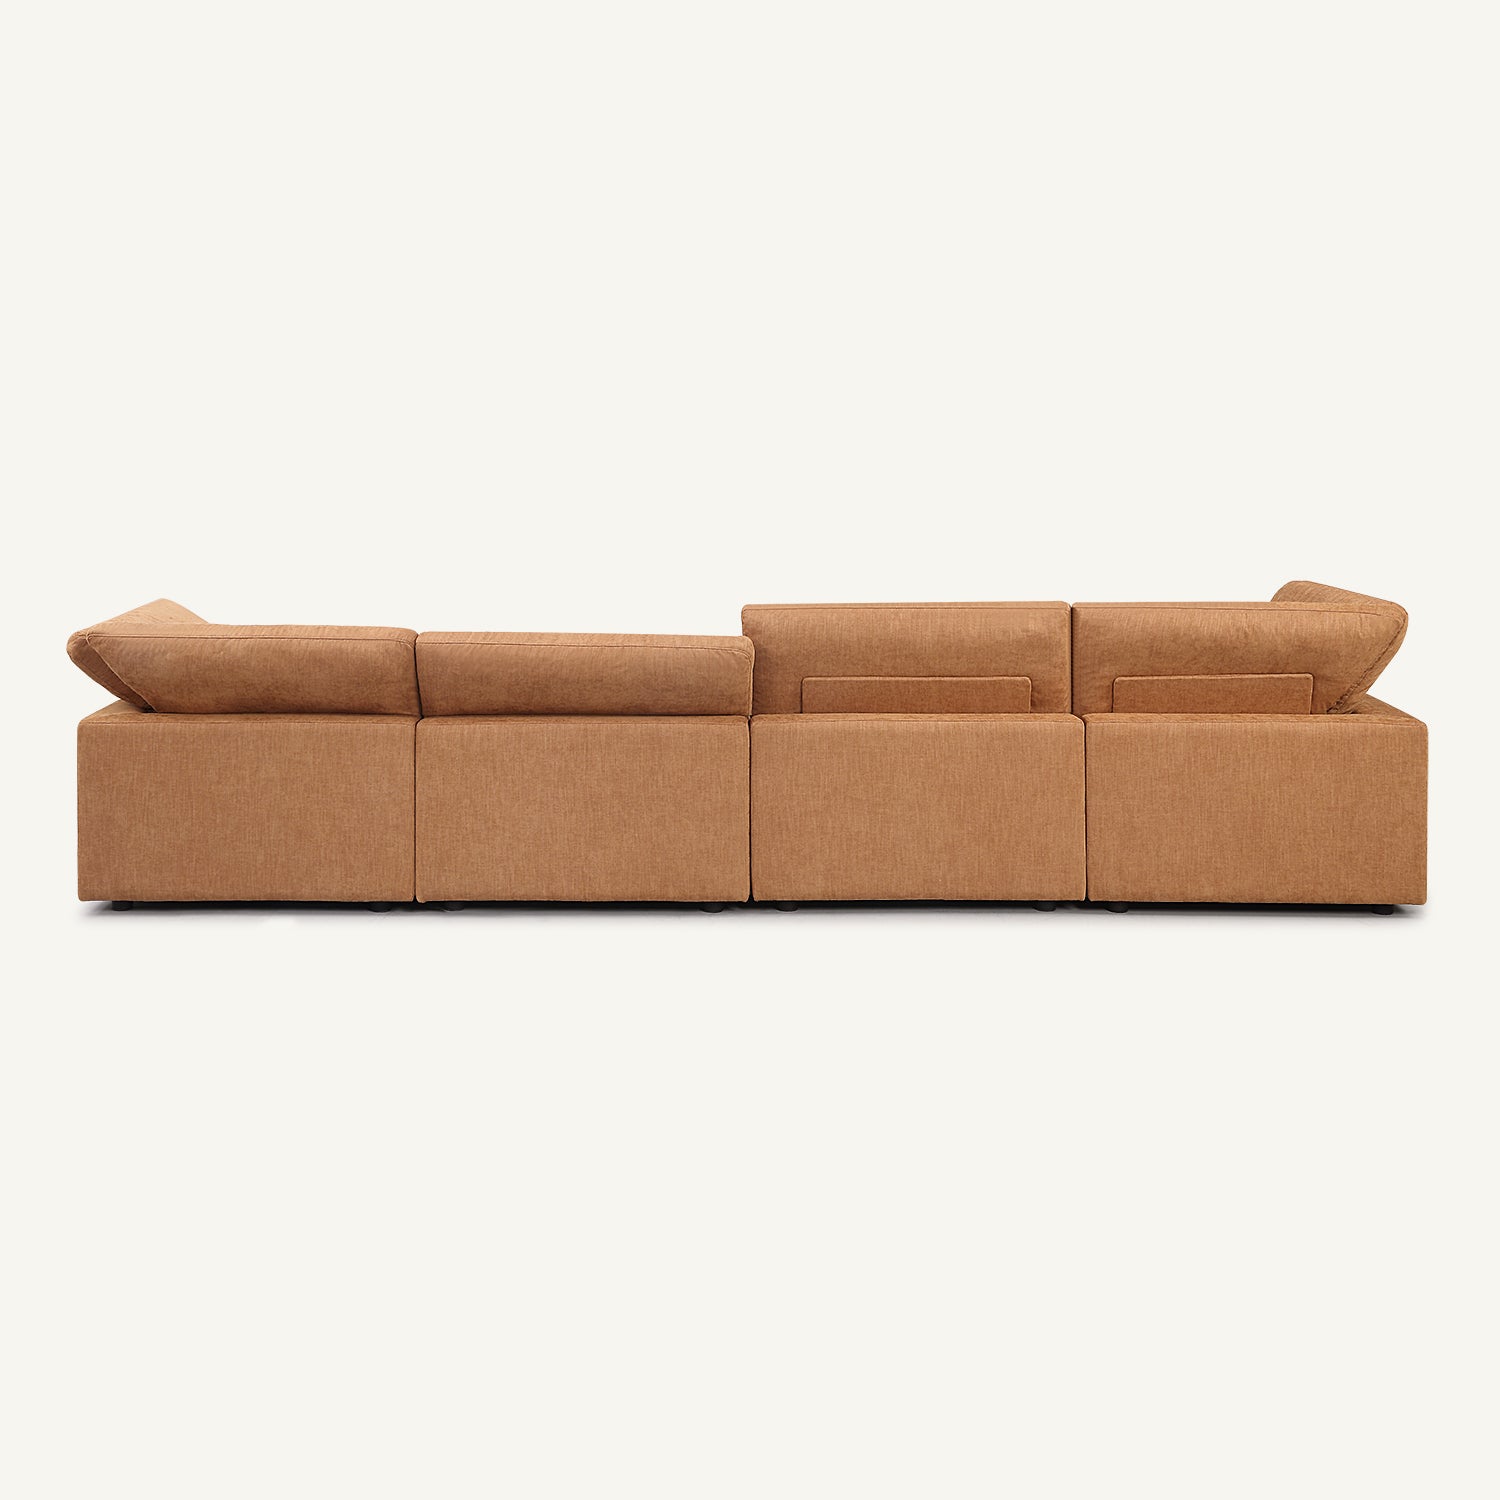 Cloud Tan Linen 6-Seat Sofa